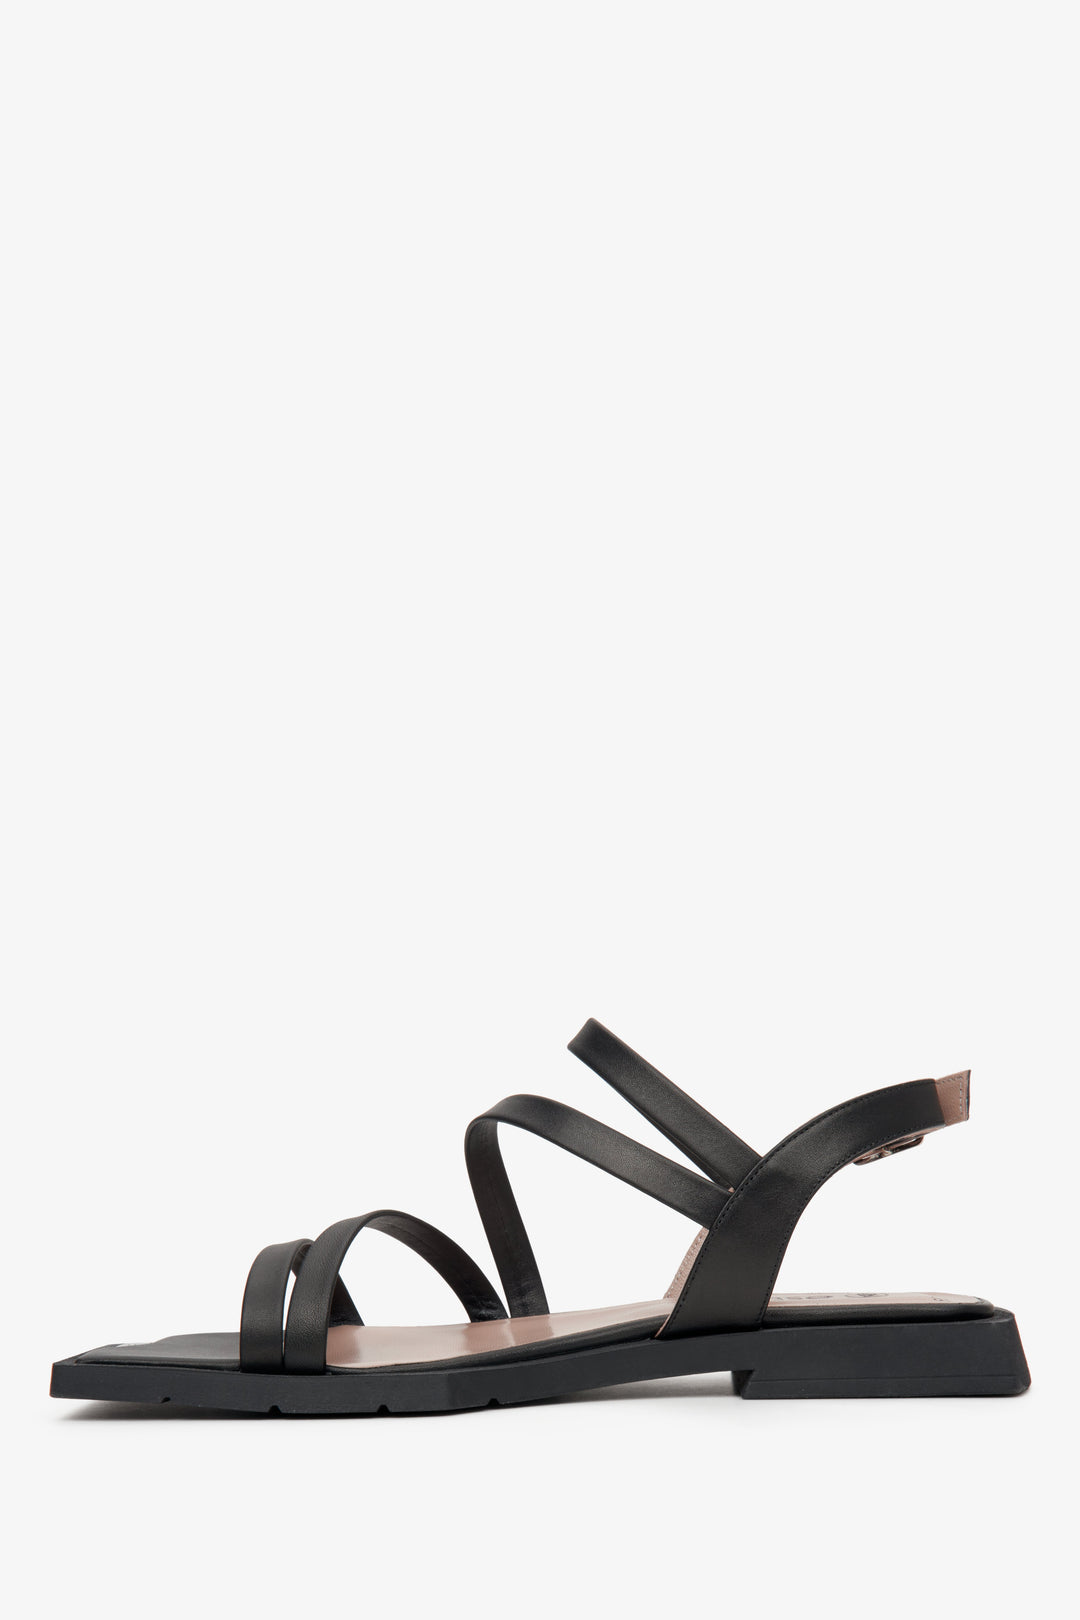 Women's summer sandals with thin straps: Estro brand, color black.